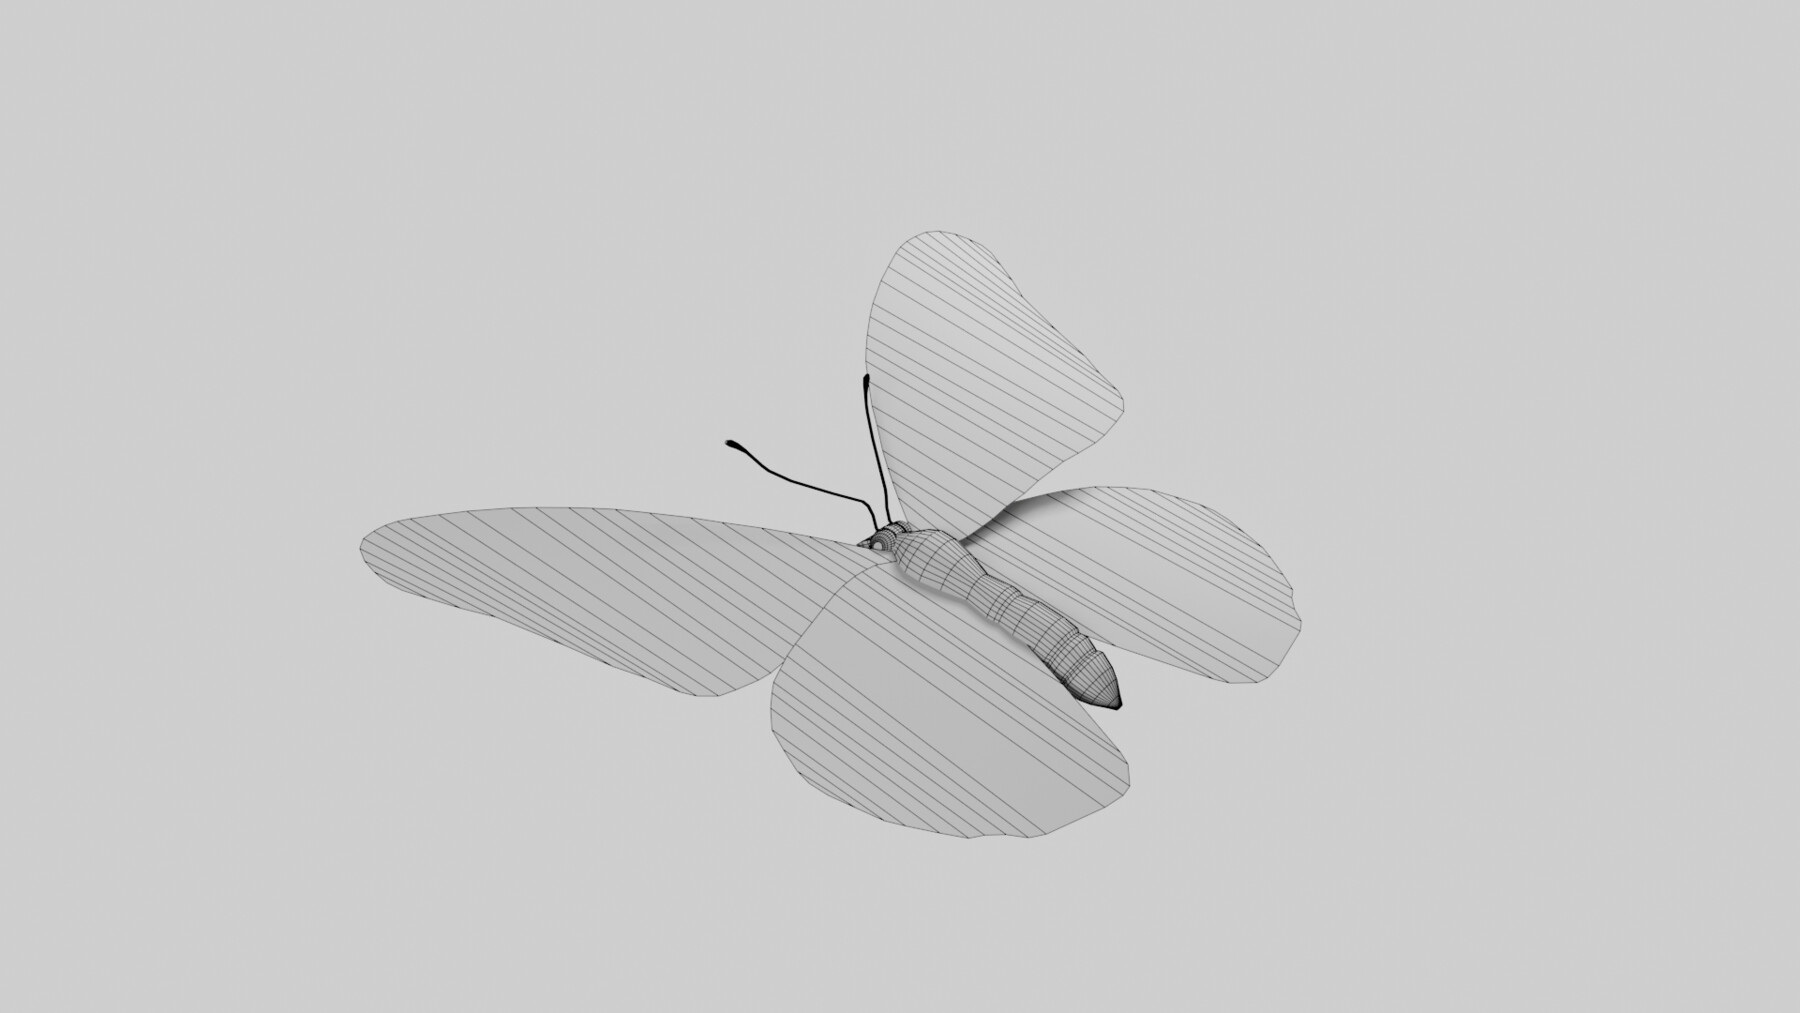 Pvc Three dimensional Simulation Black And White Butterfly - Temu Australia